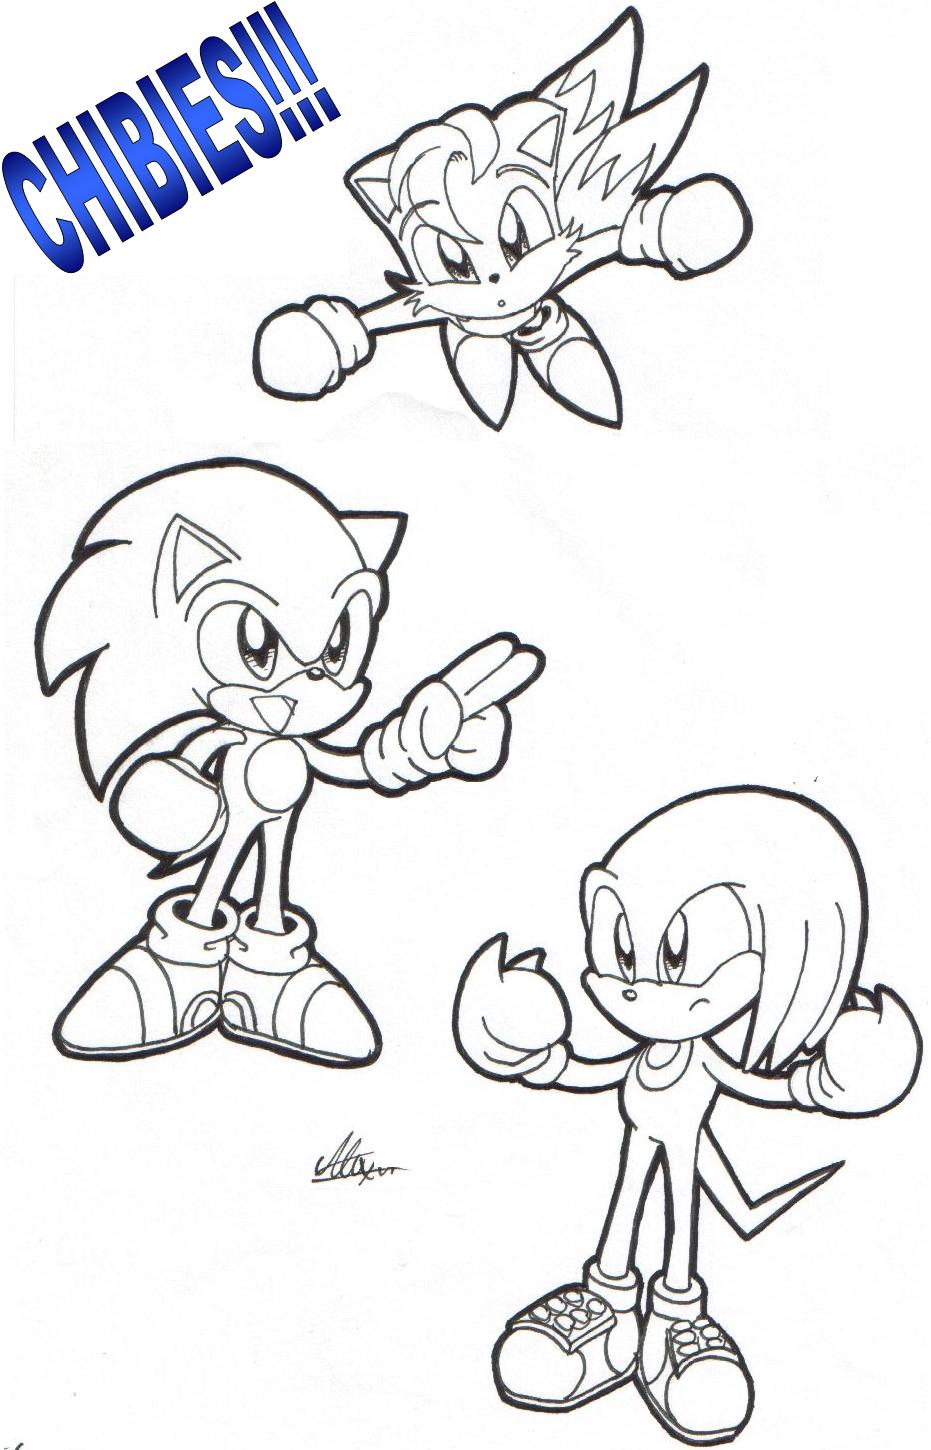 Chibi Team Sonic! by Mr_G